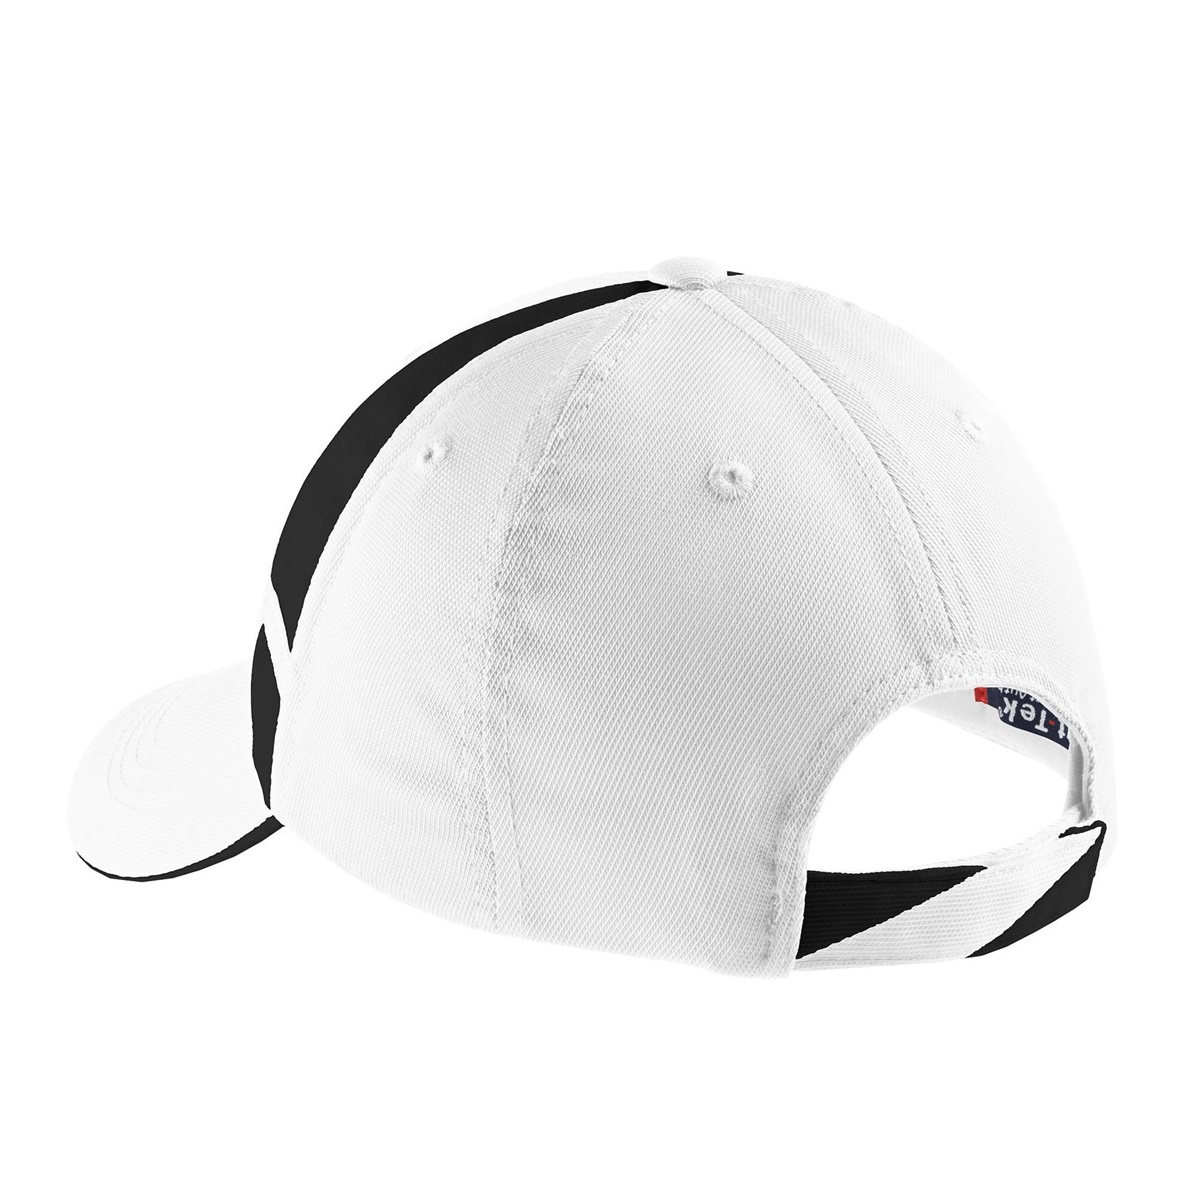 Sport-Tek STC12 Dry Zone Mesh Inset Cap - White/Black